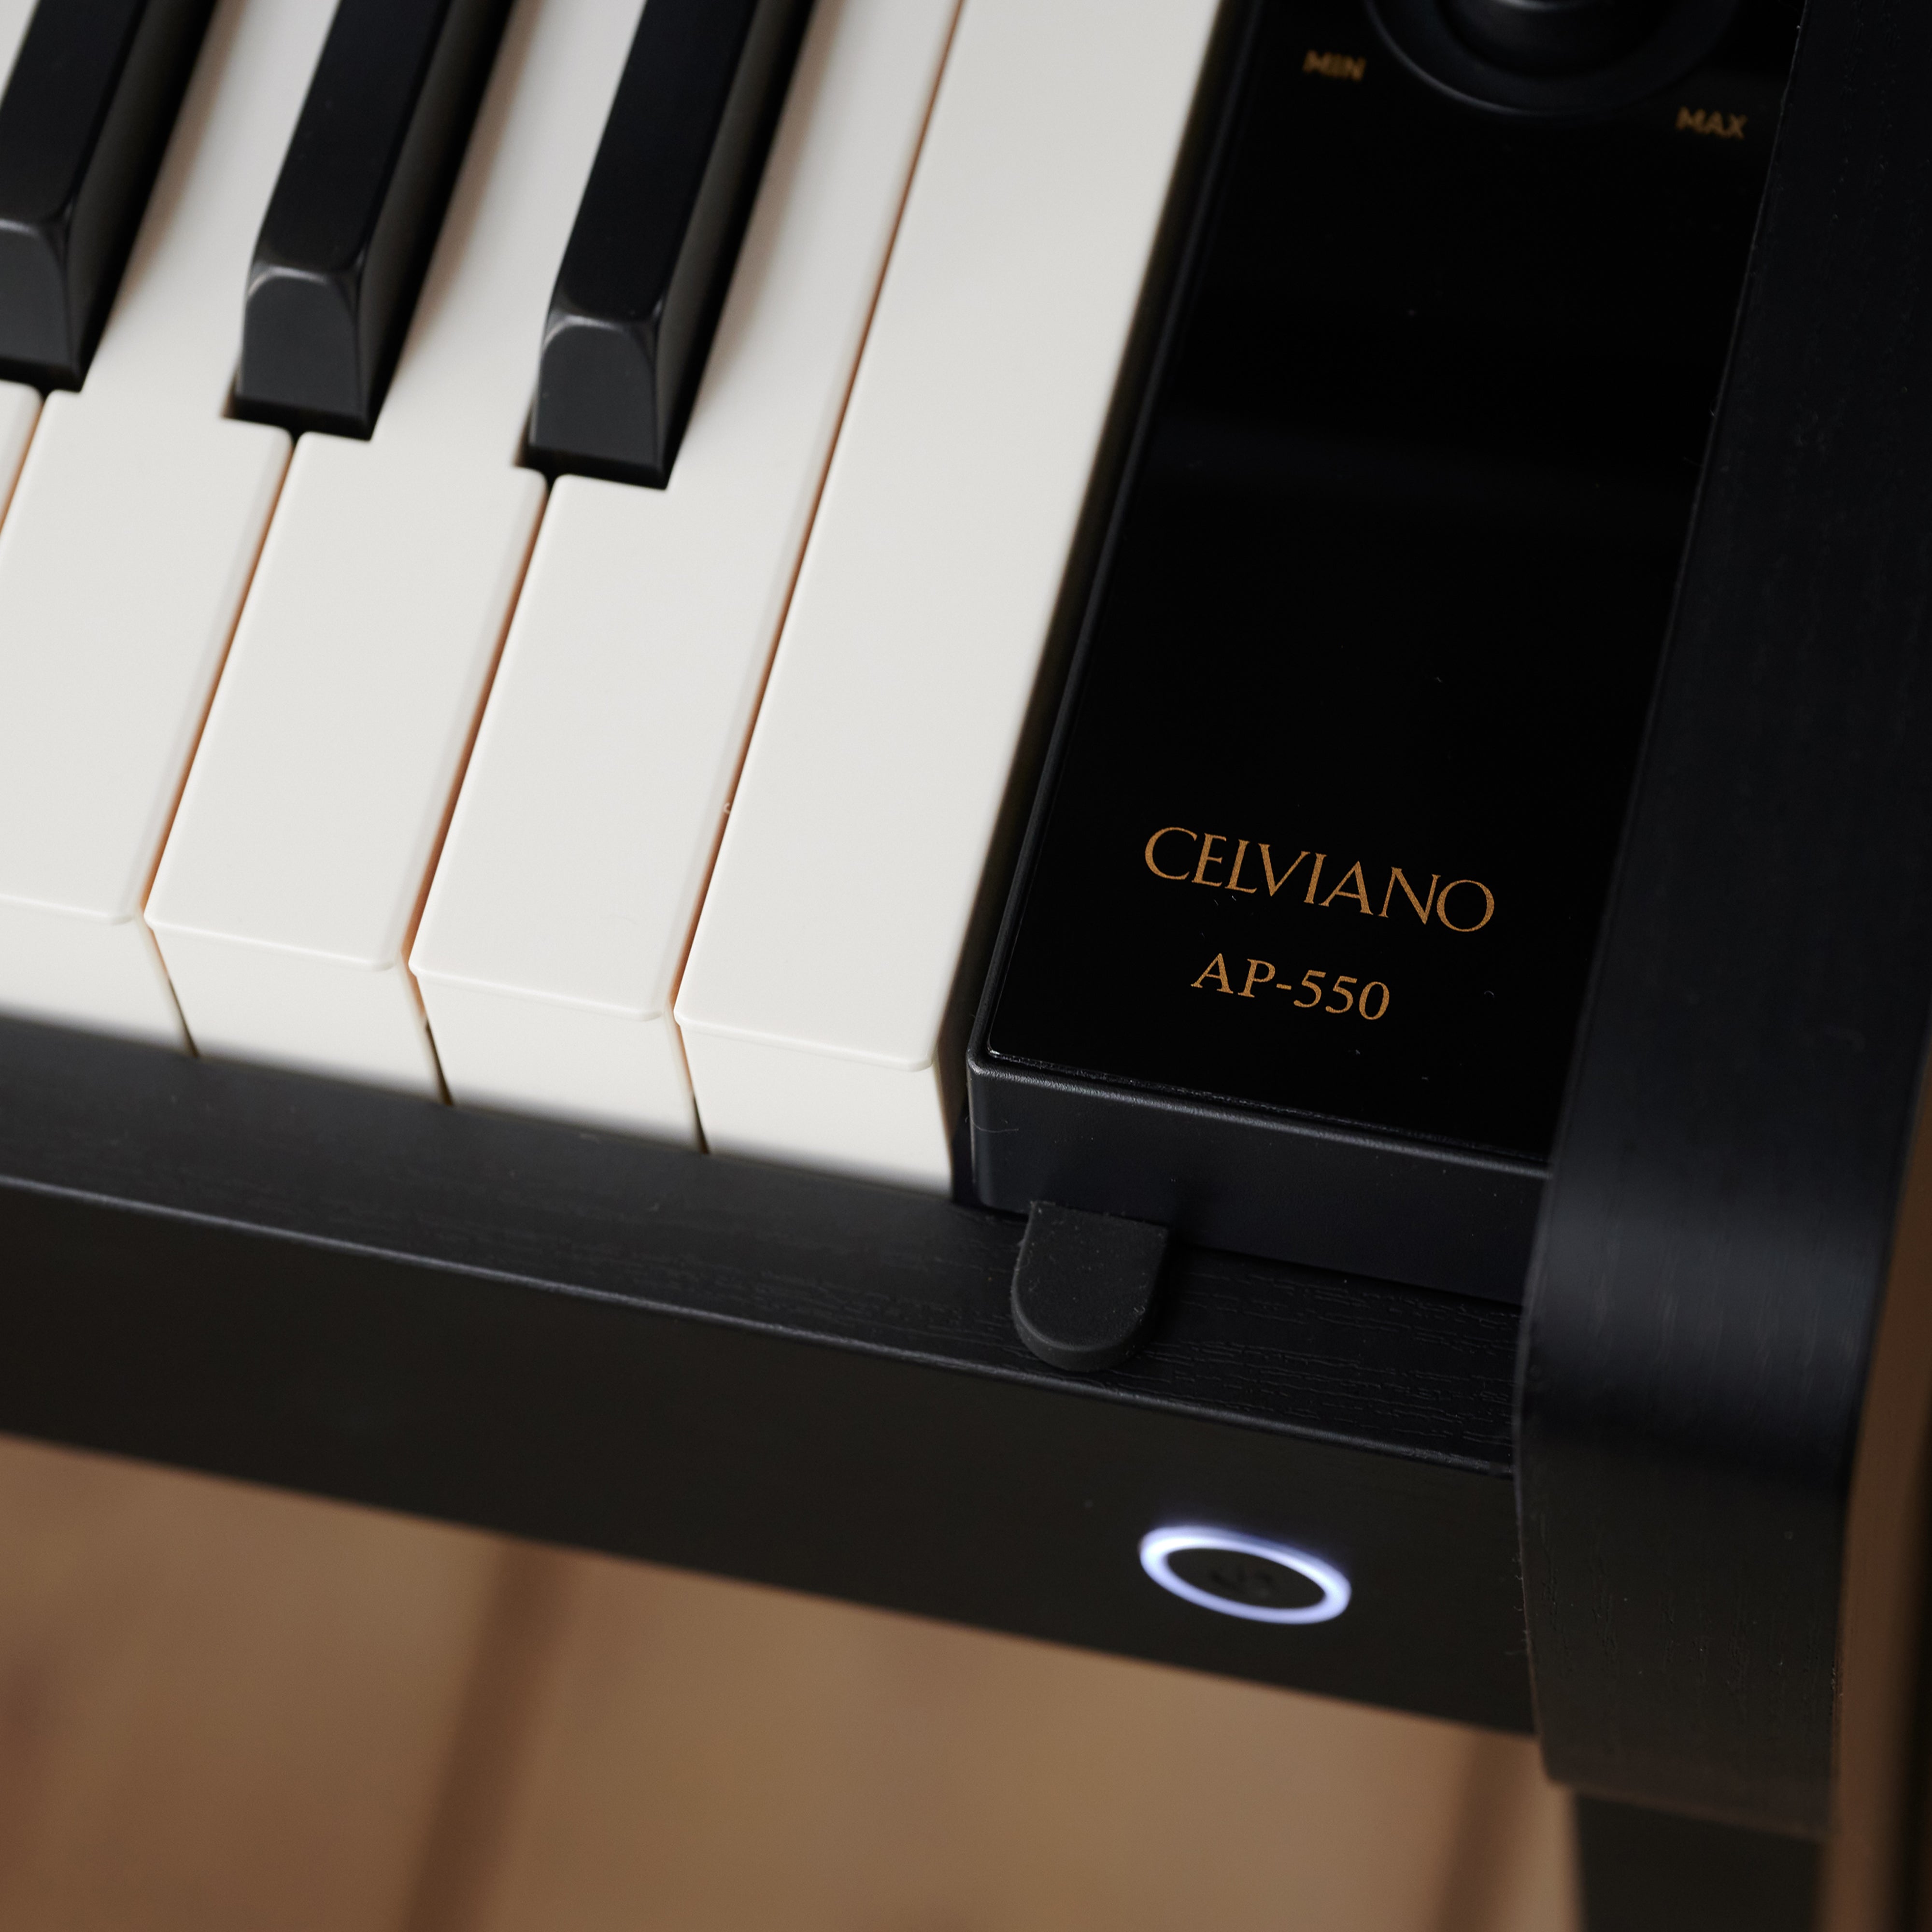 Casio Celviano AP-550 Digital Piano - Black - power and volume controls